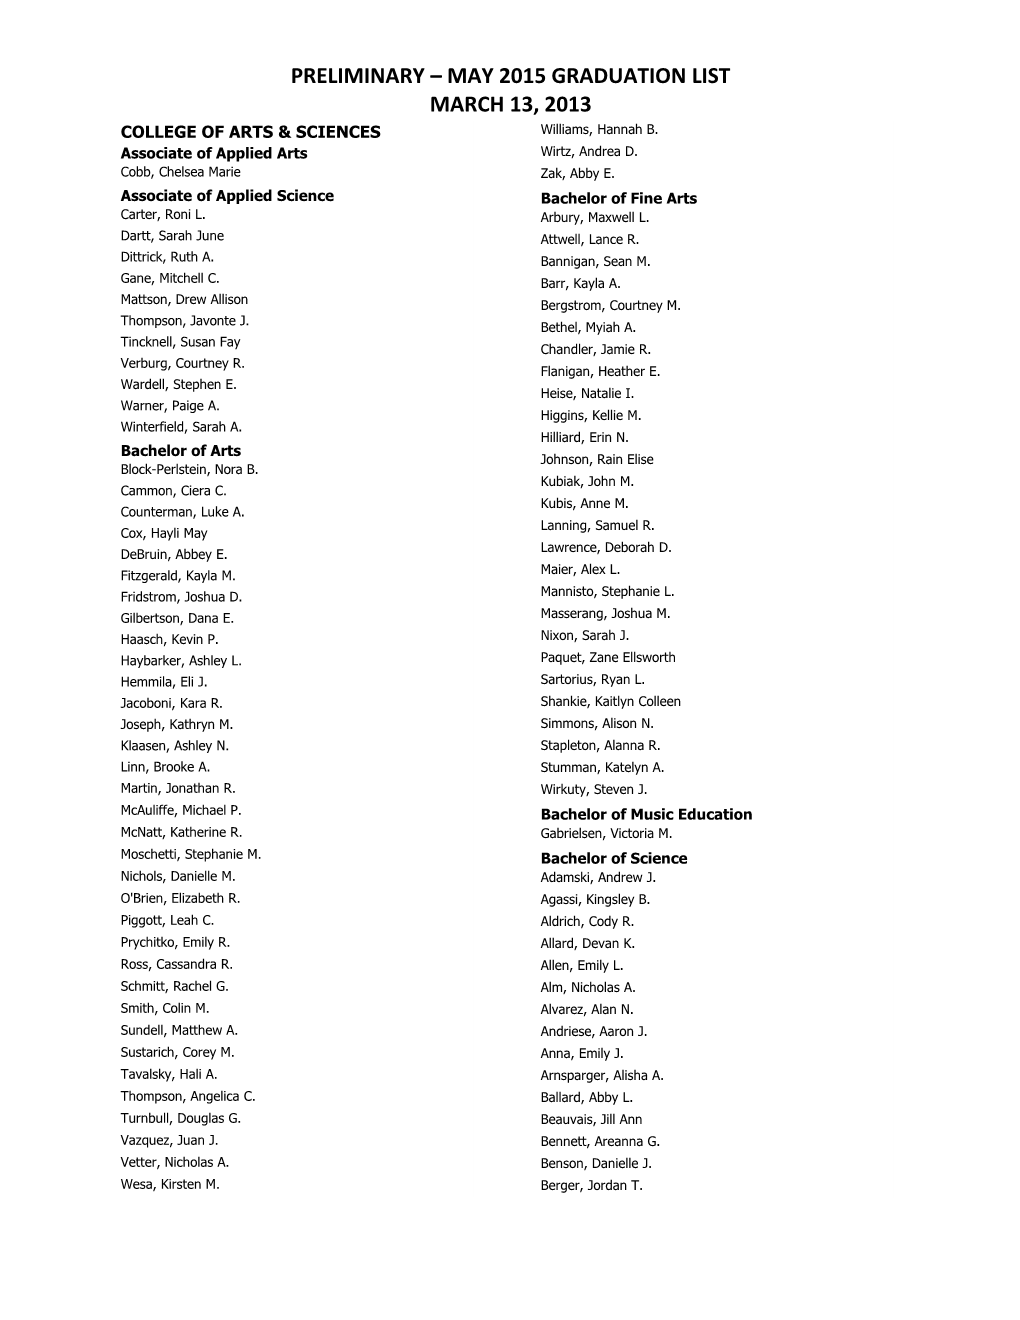 Preliminary May 2015 Graduation List